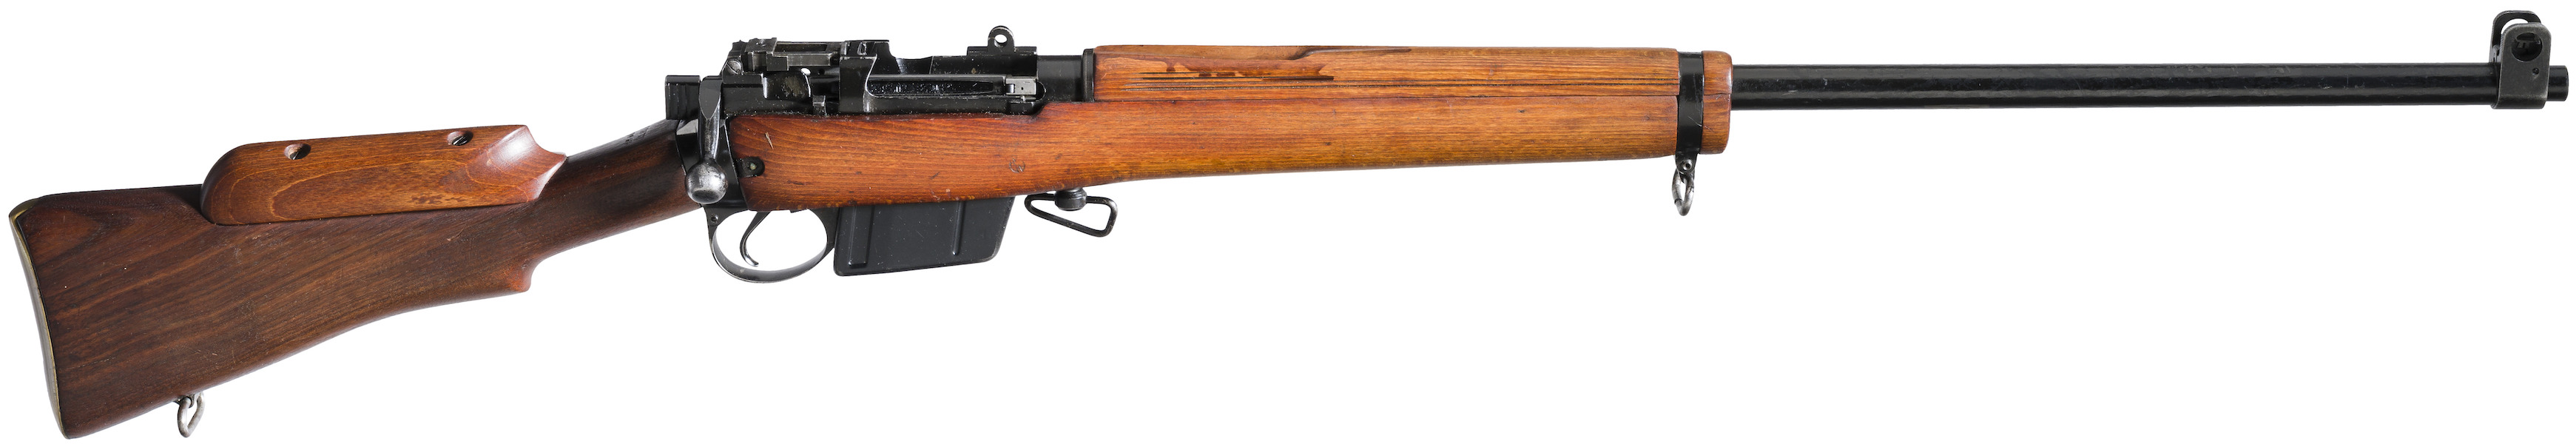 Lee-Enfield L 42 A1 bolt-action sniper rifle, €8,750